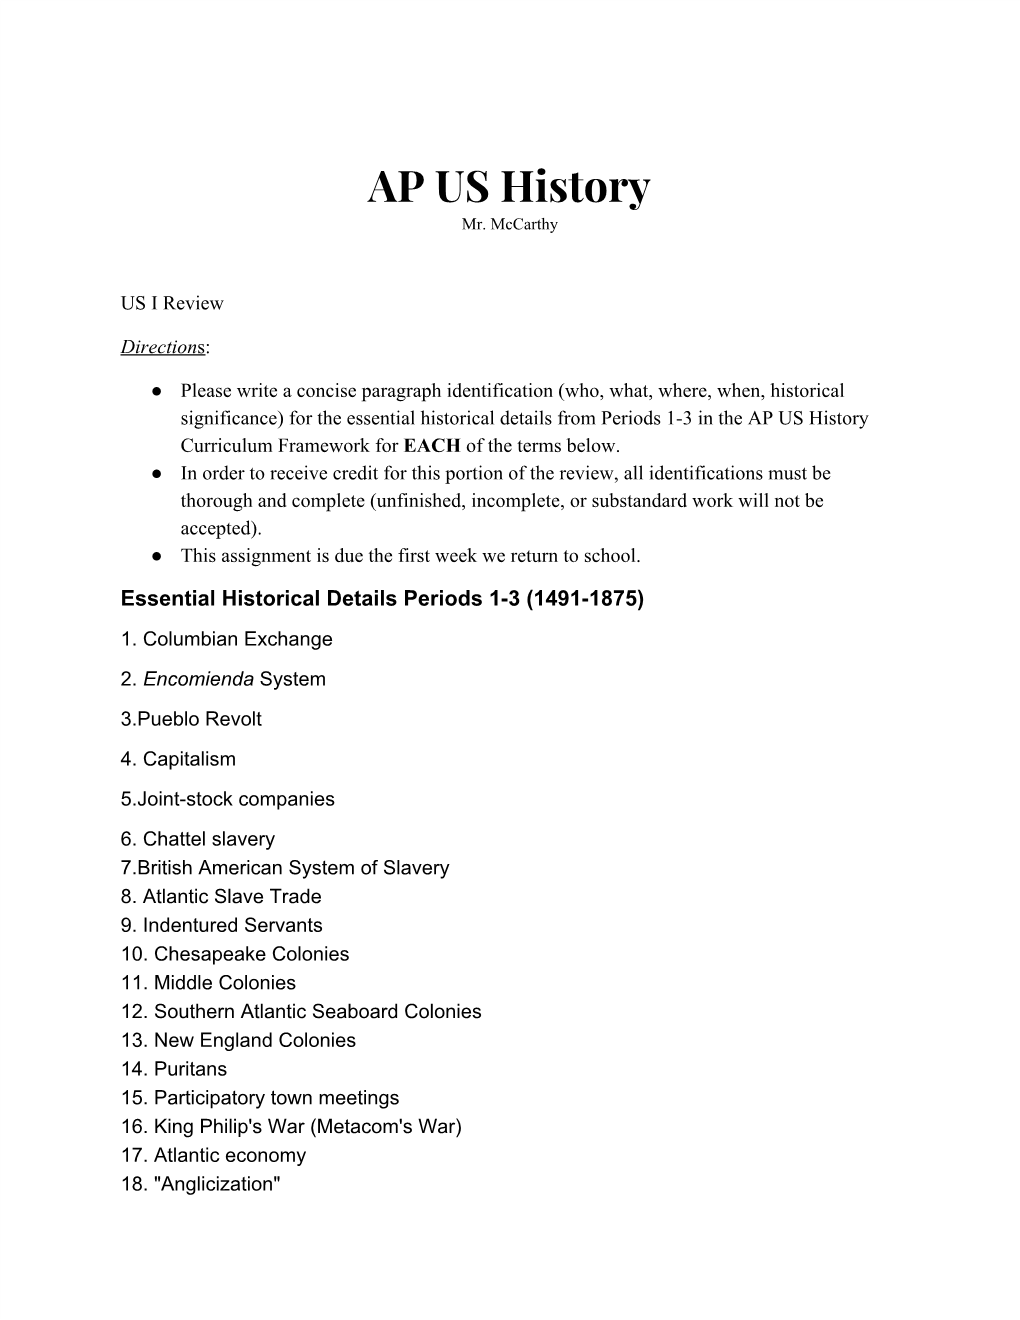 AP US History Mr